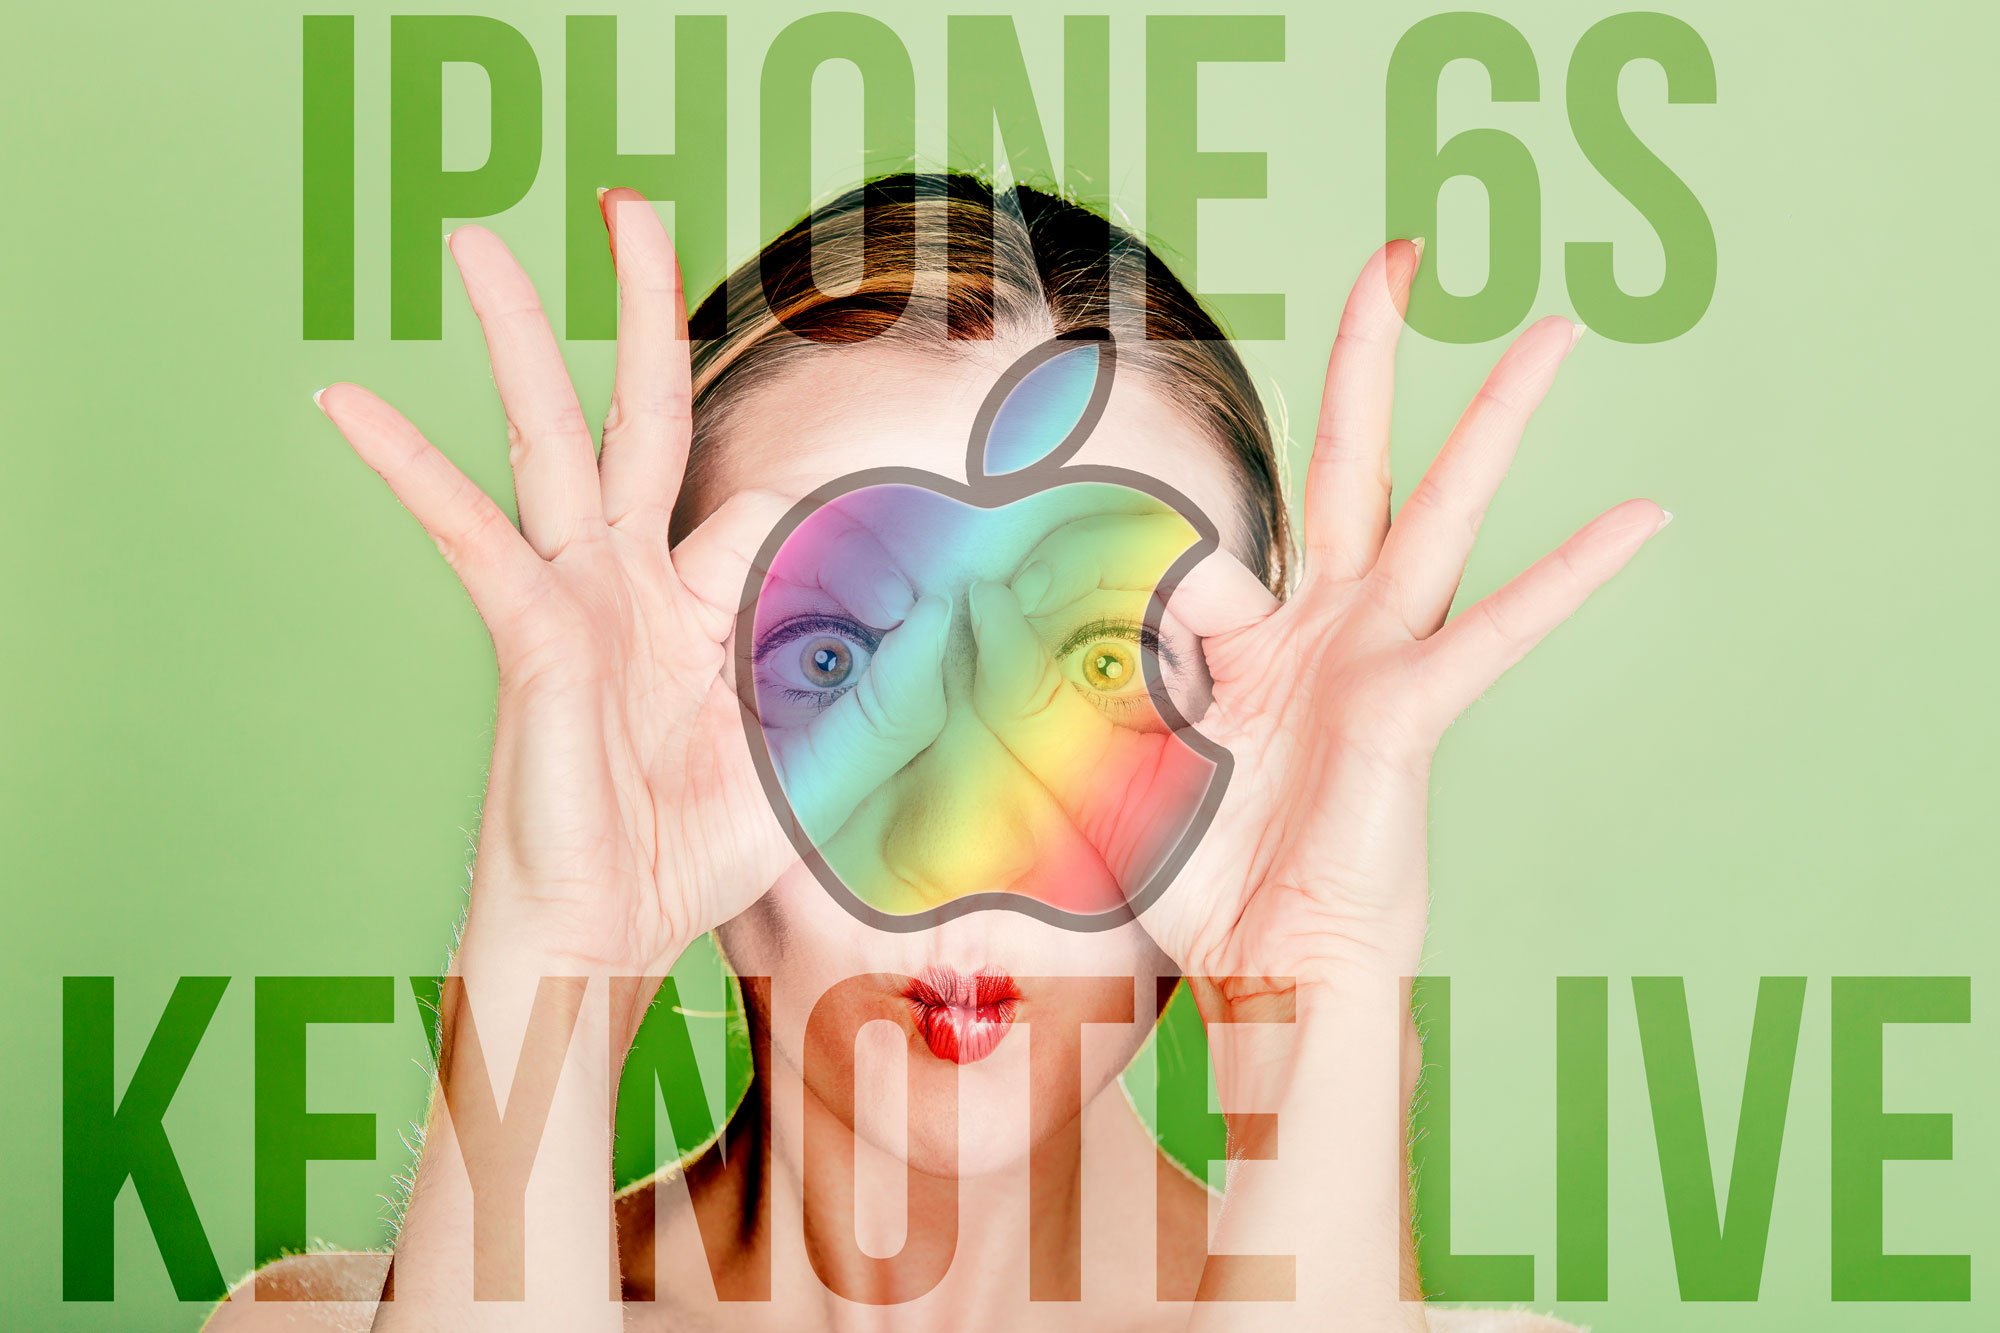 iPhone 6S Keynote LIVE 1